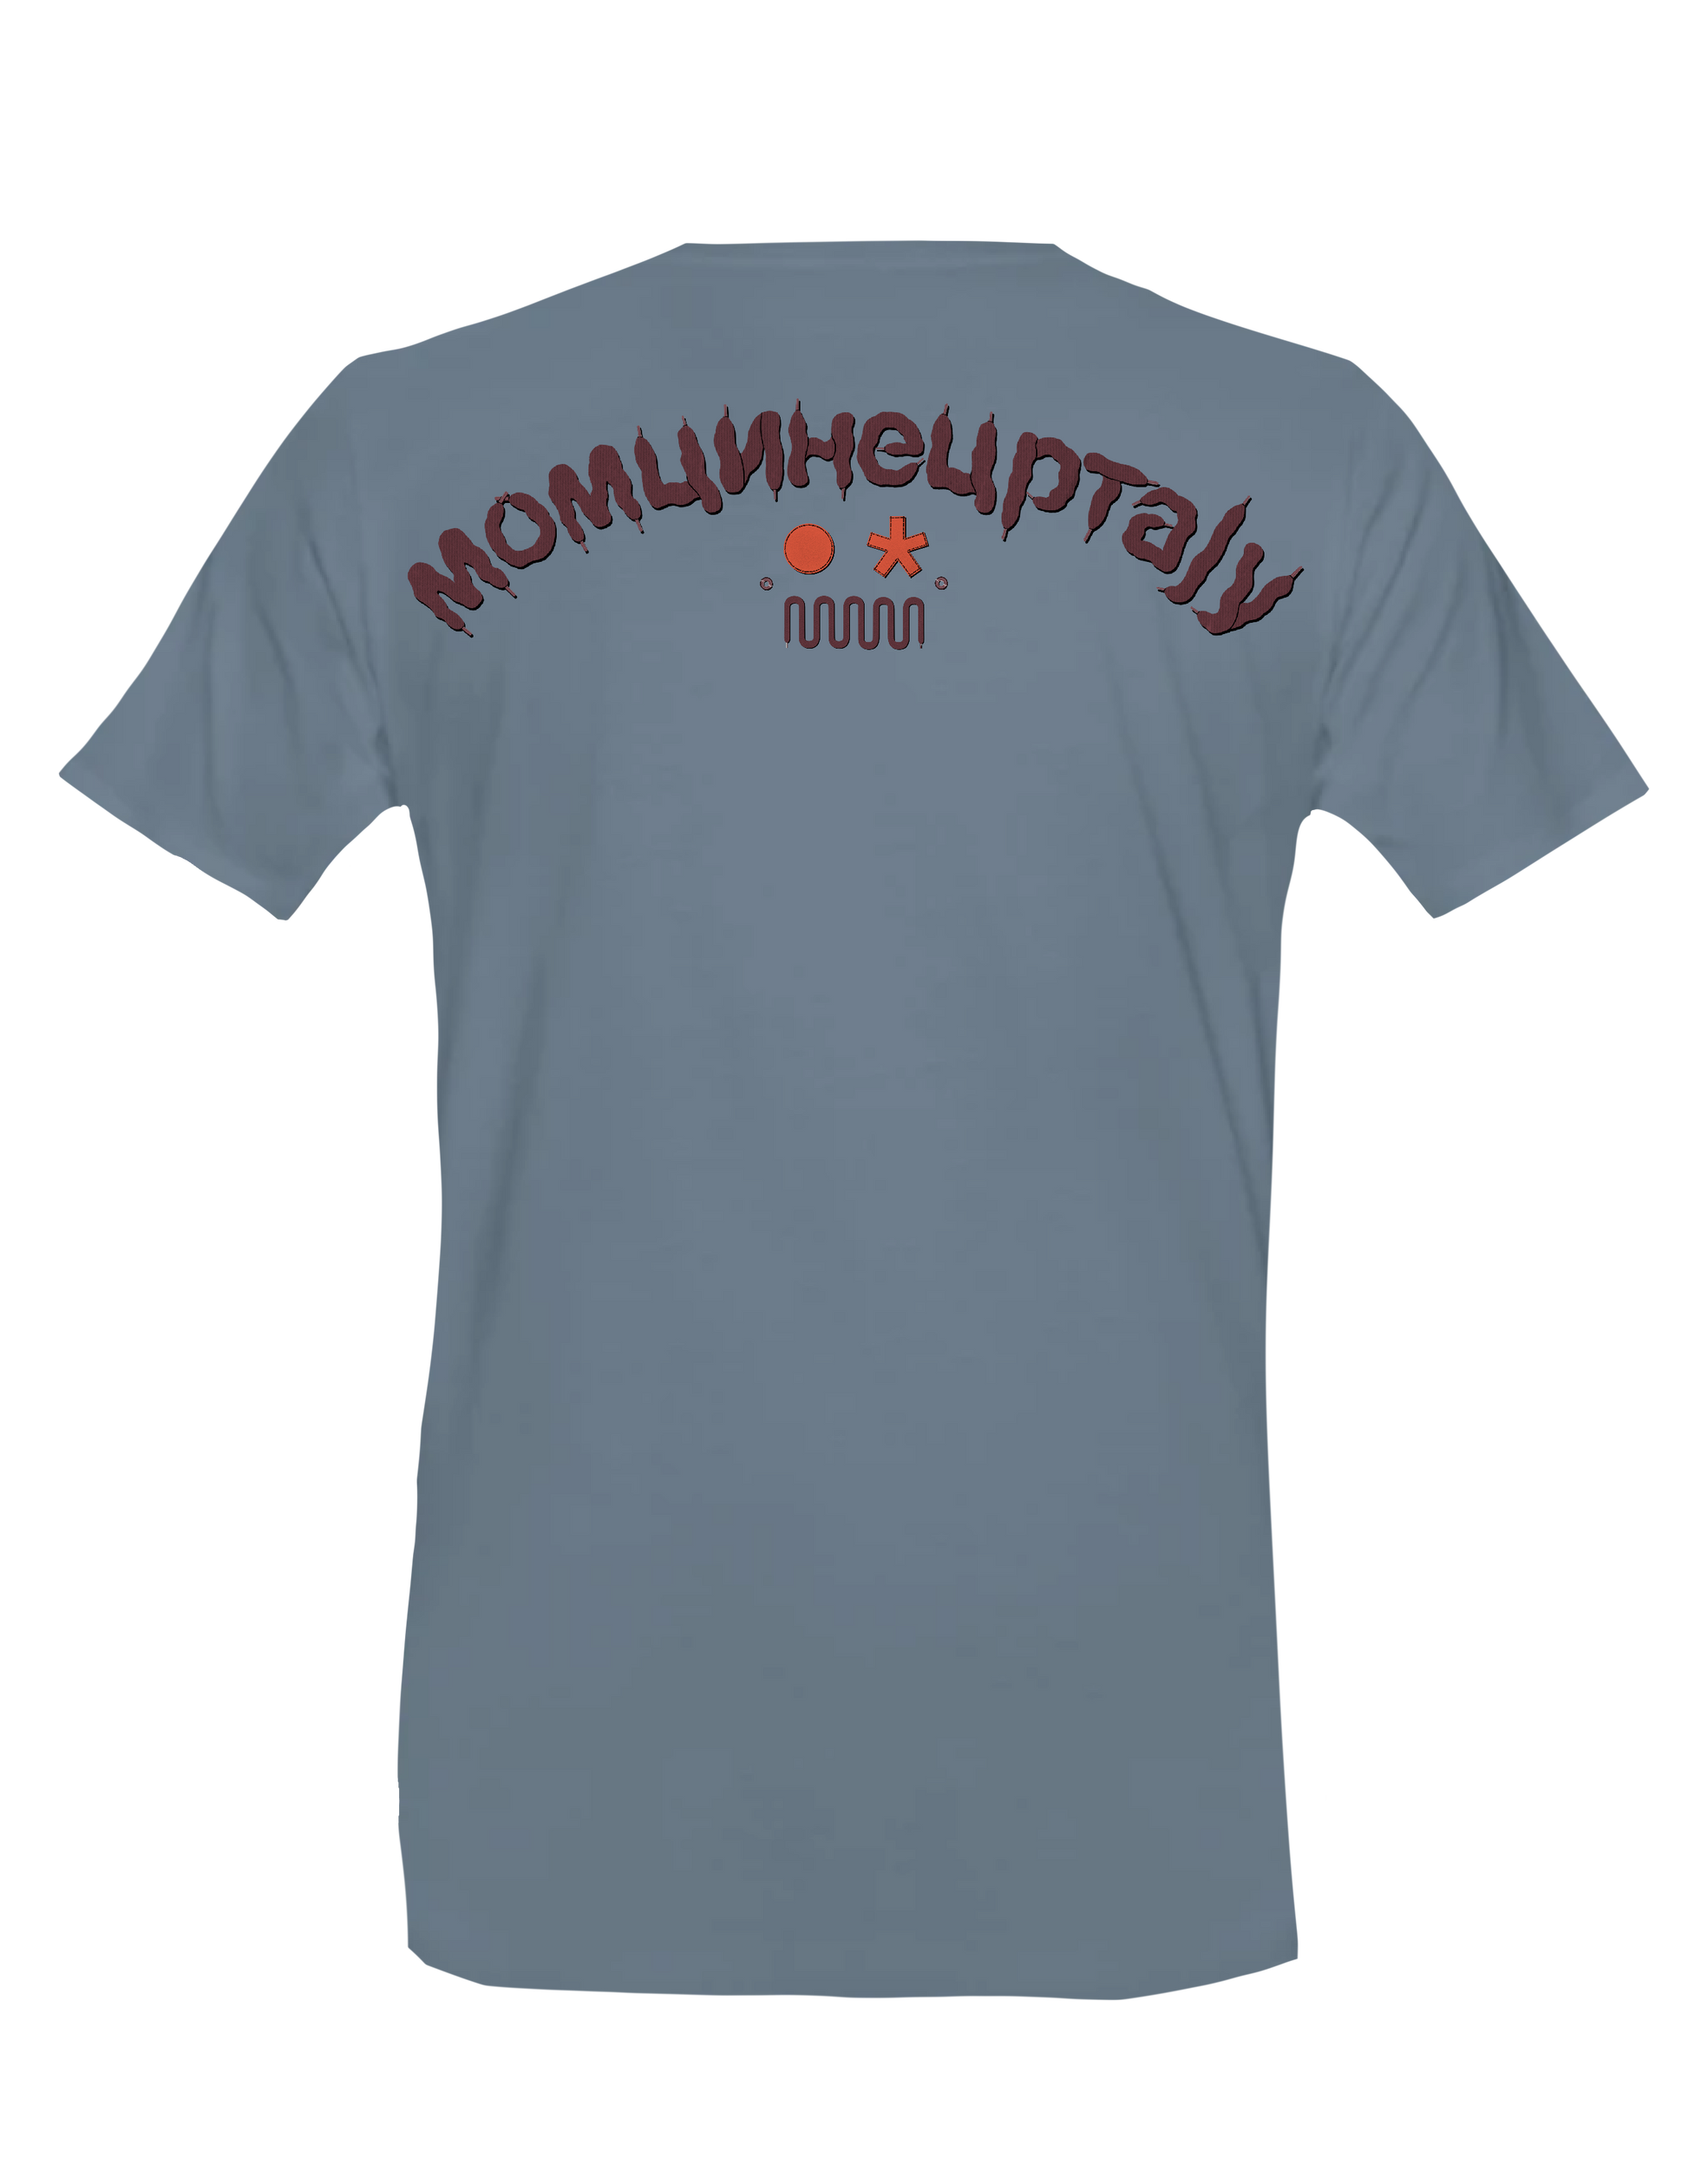 IVY PARK BEYONCÉ (Steel Blue) - T-Shirt - BOYSDONTDRAW